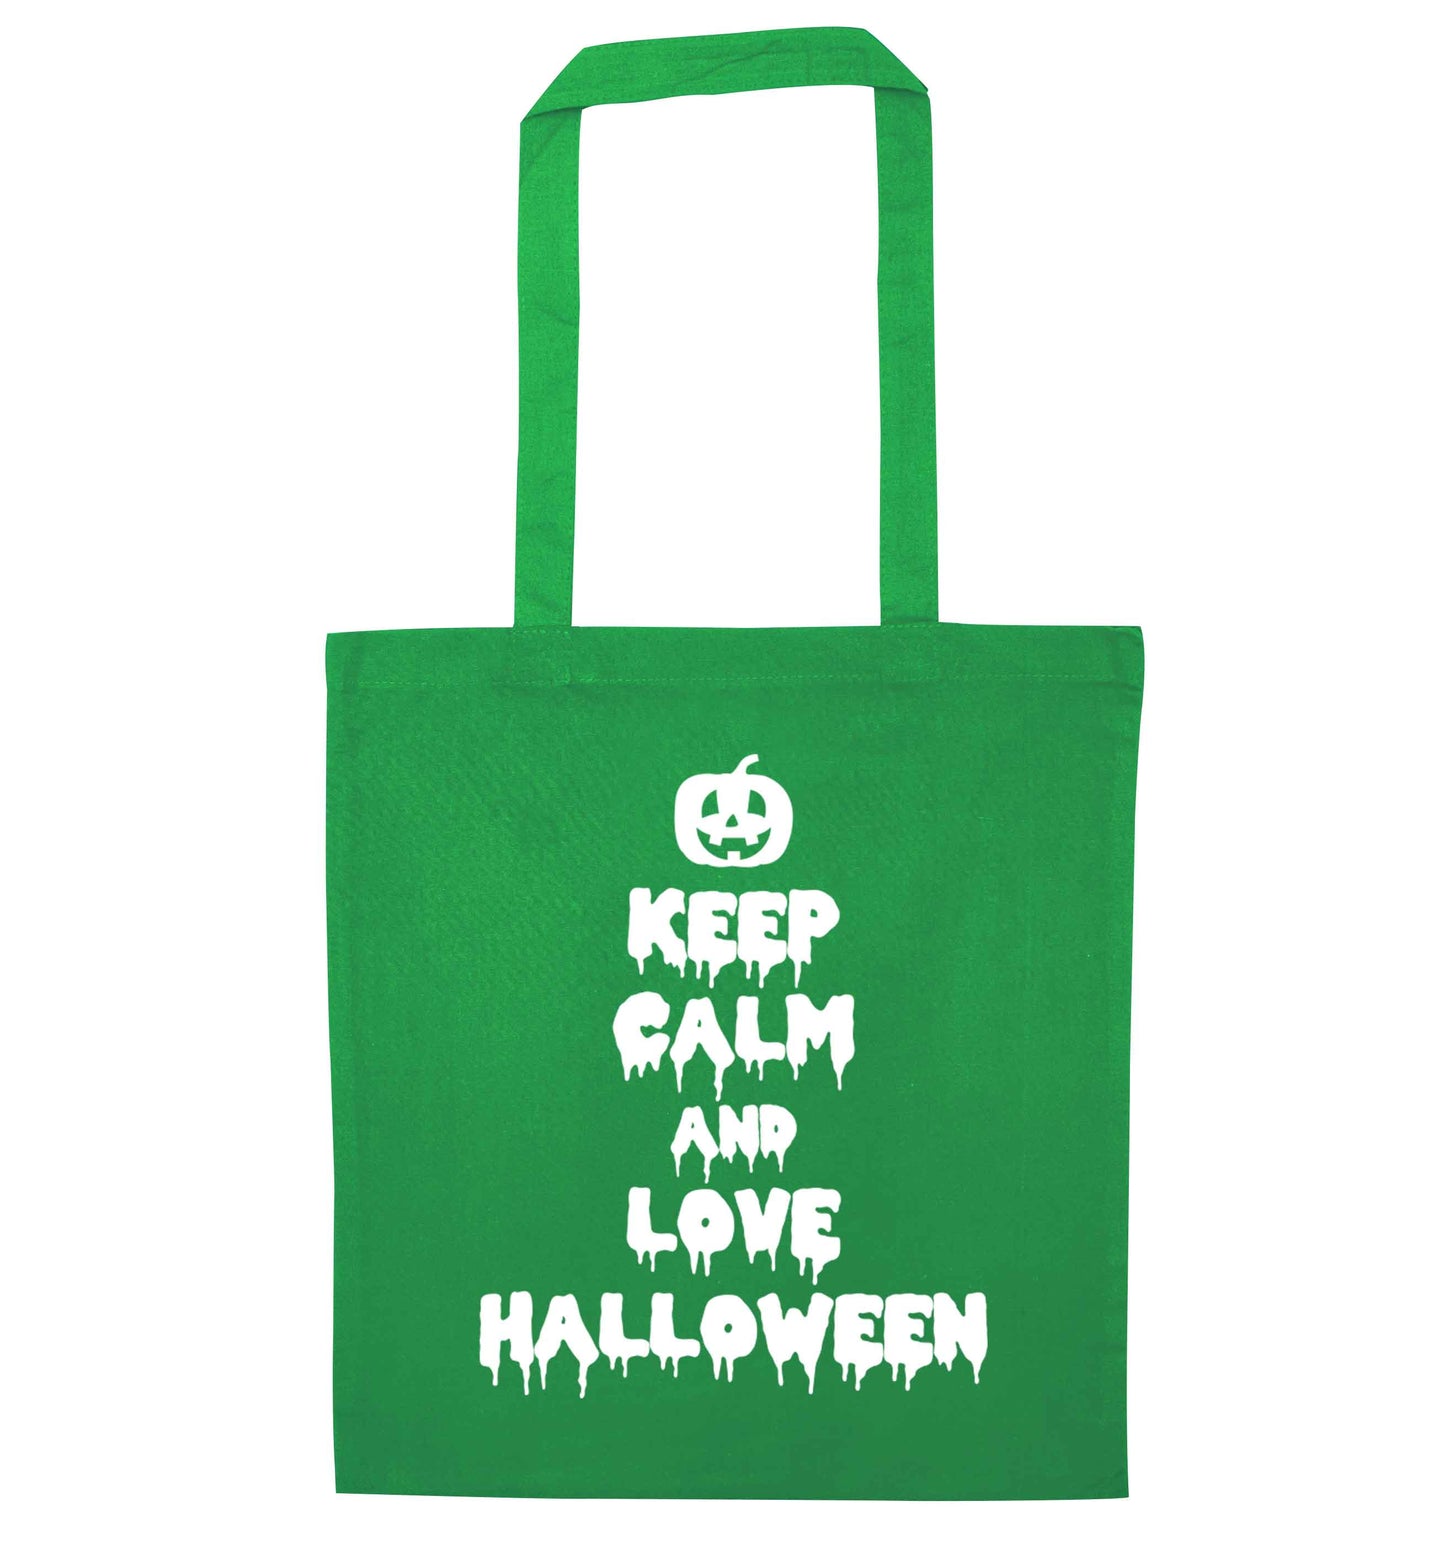 Keep calm and love halloween green tote bag